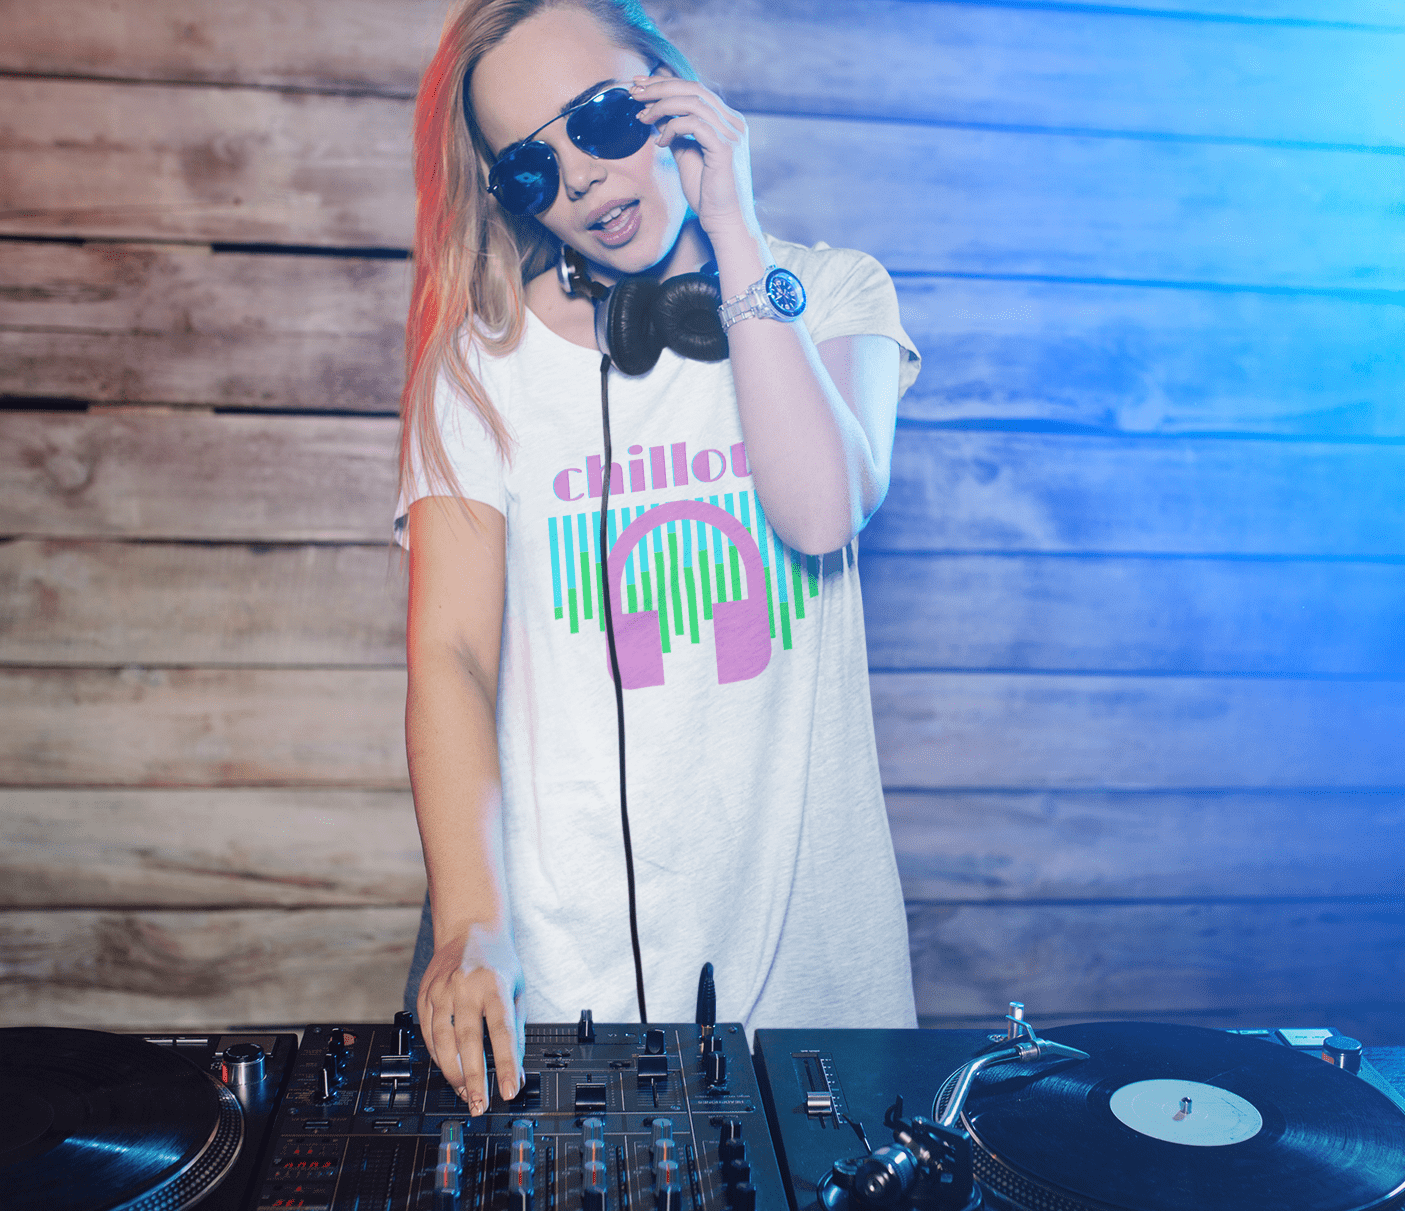 DJ chillout shirt